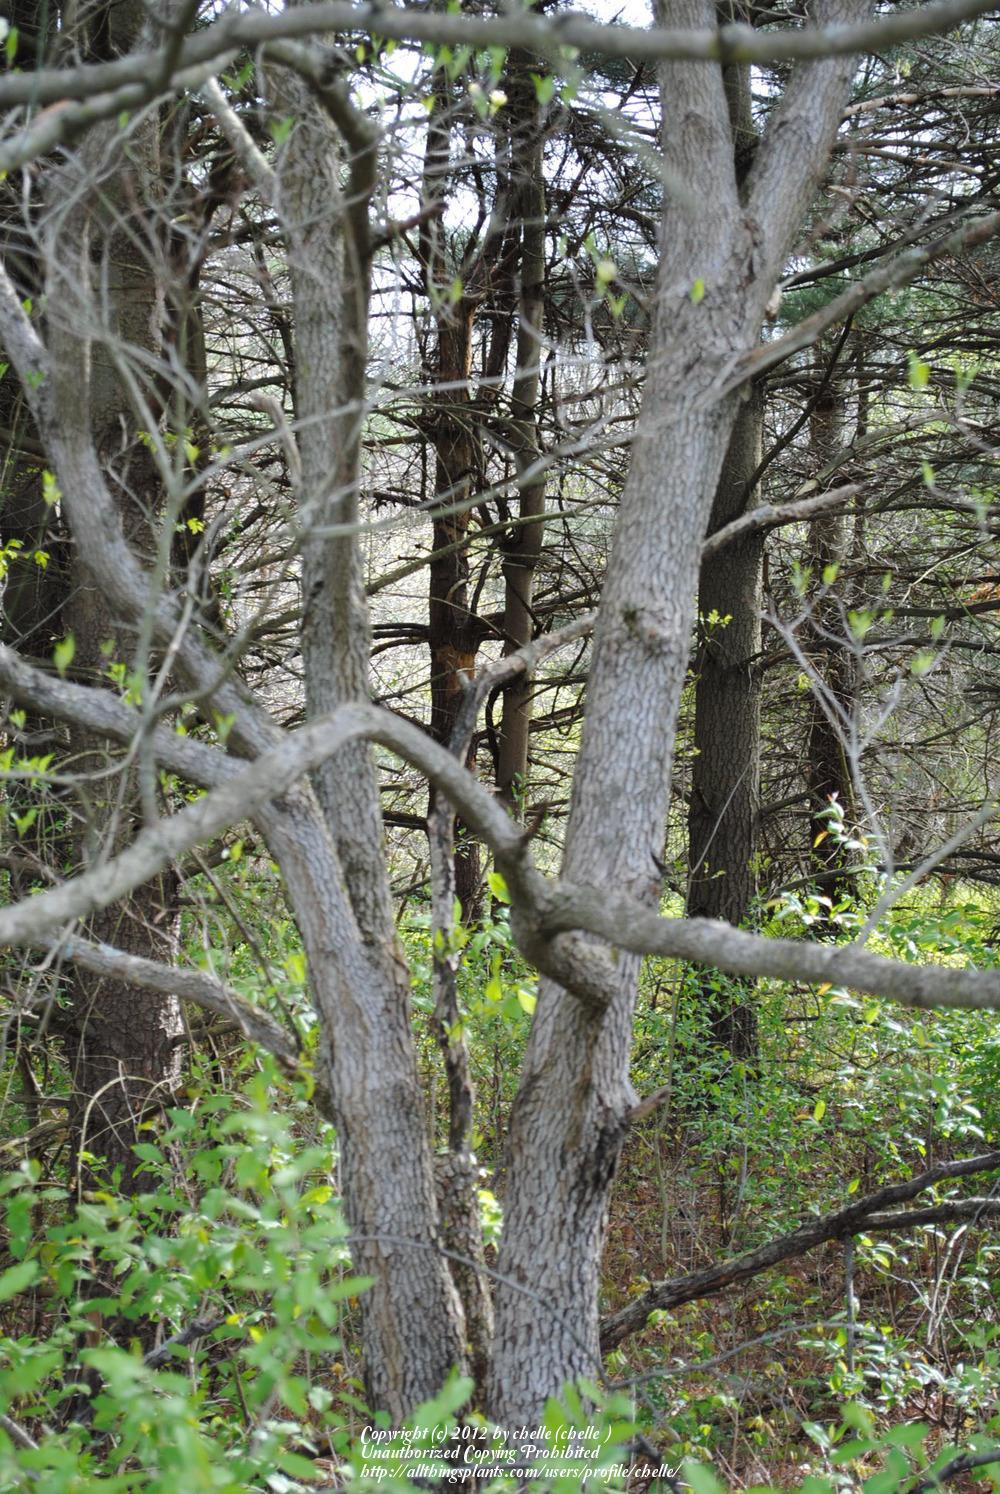 Photo of Flowering Dogwood (Cornus florida) uploaded by chelle